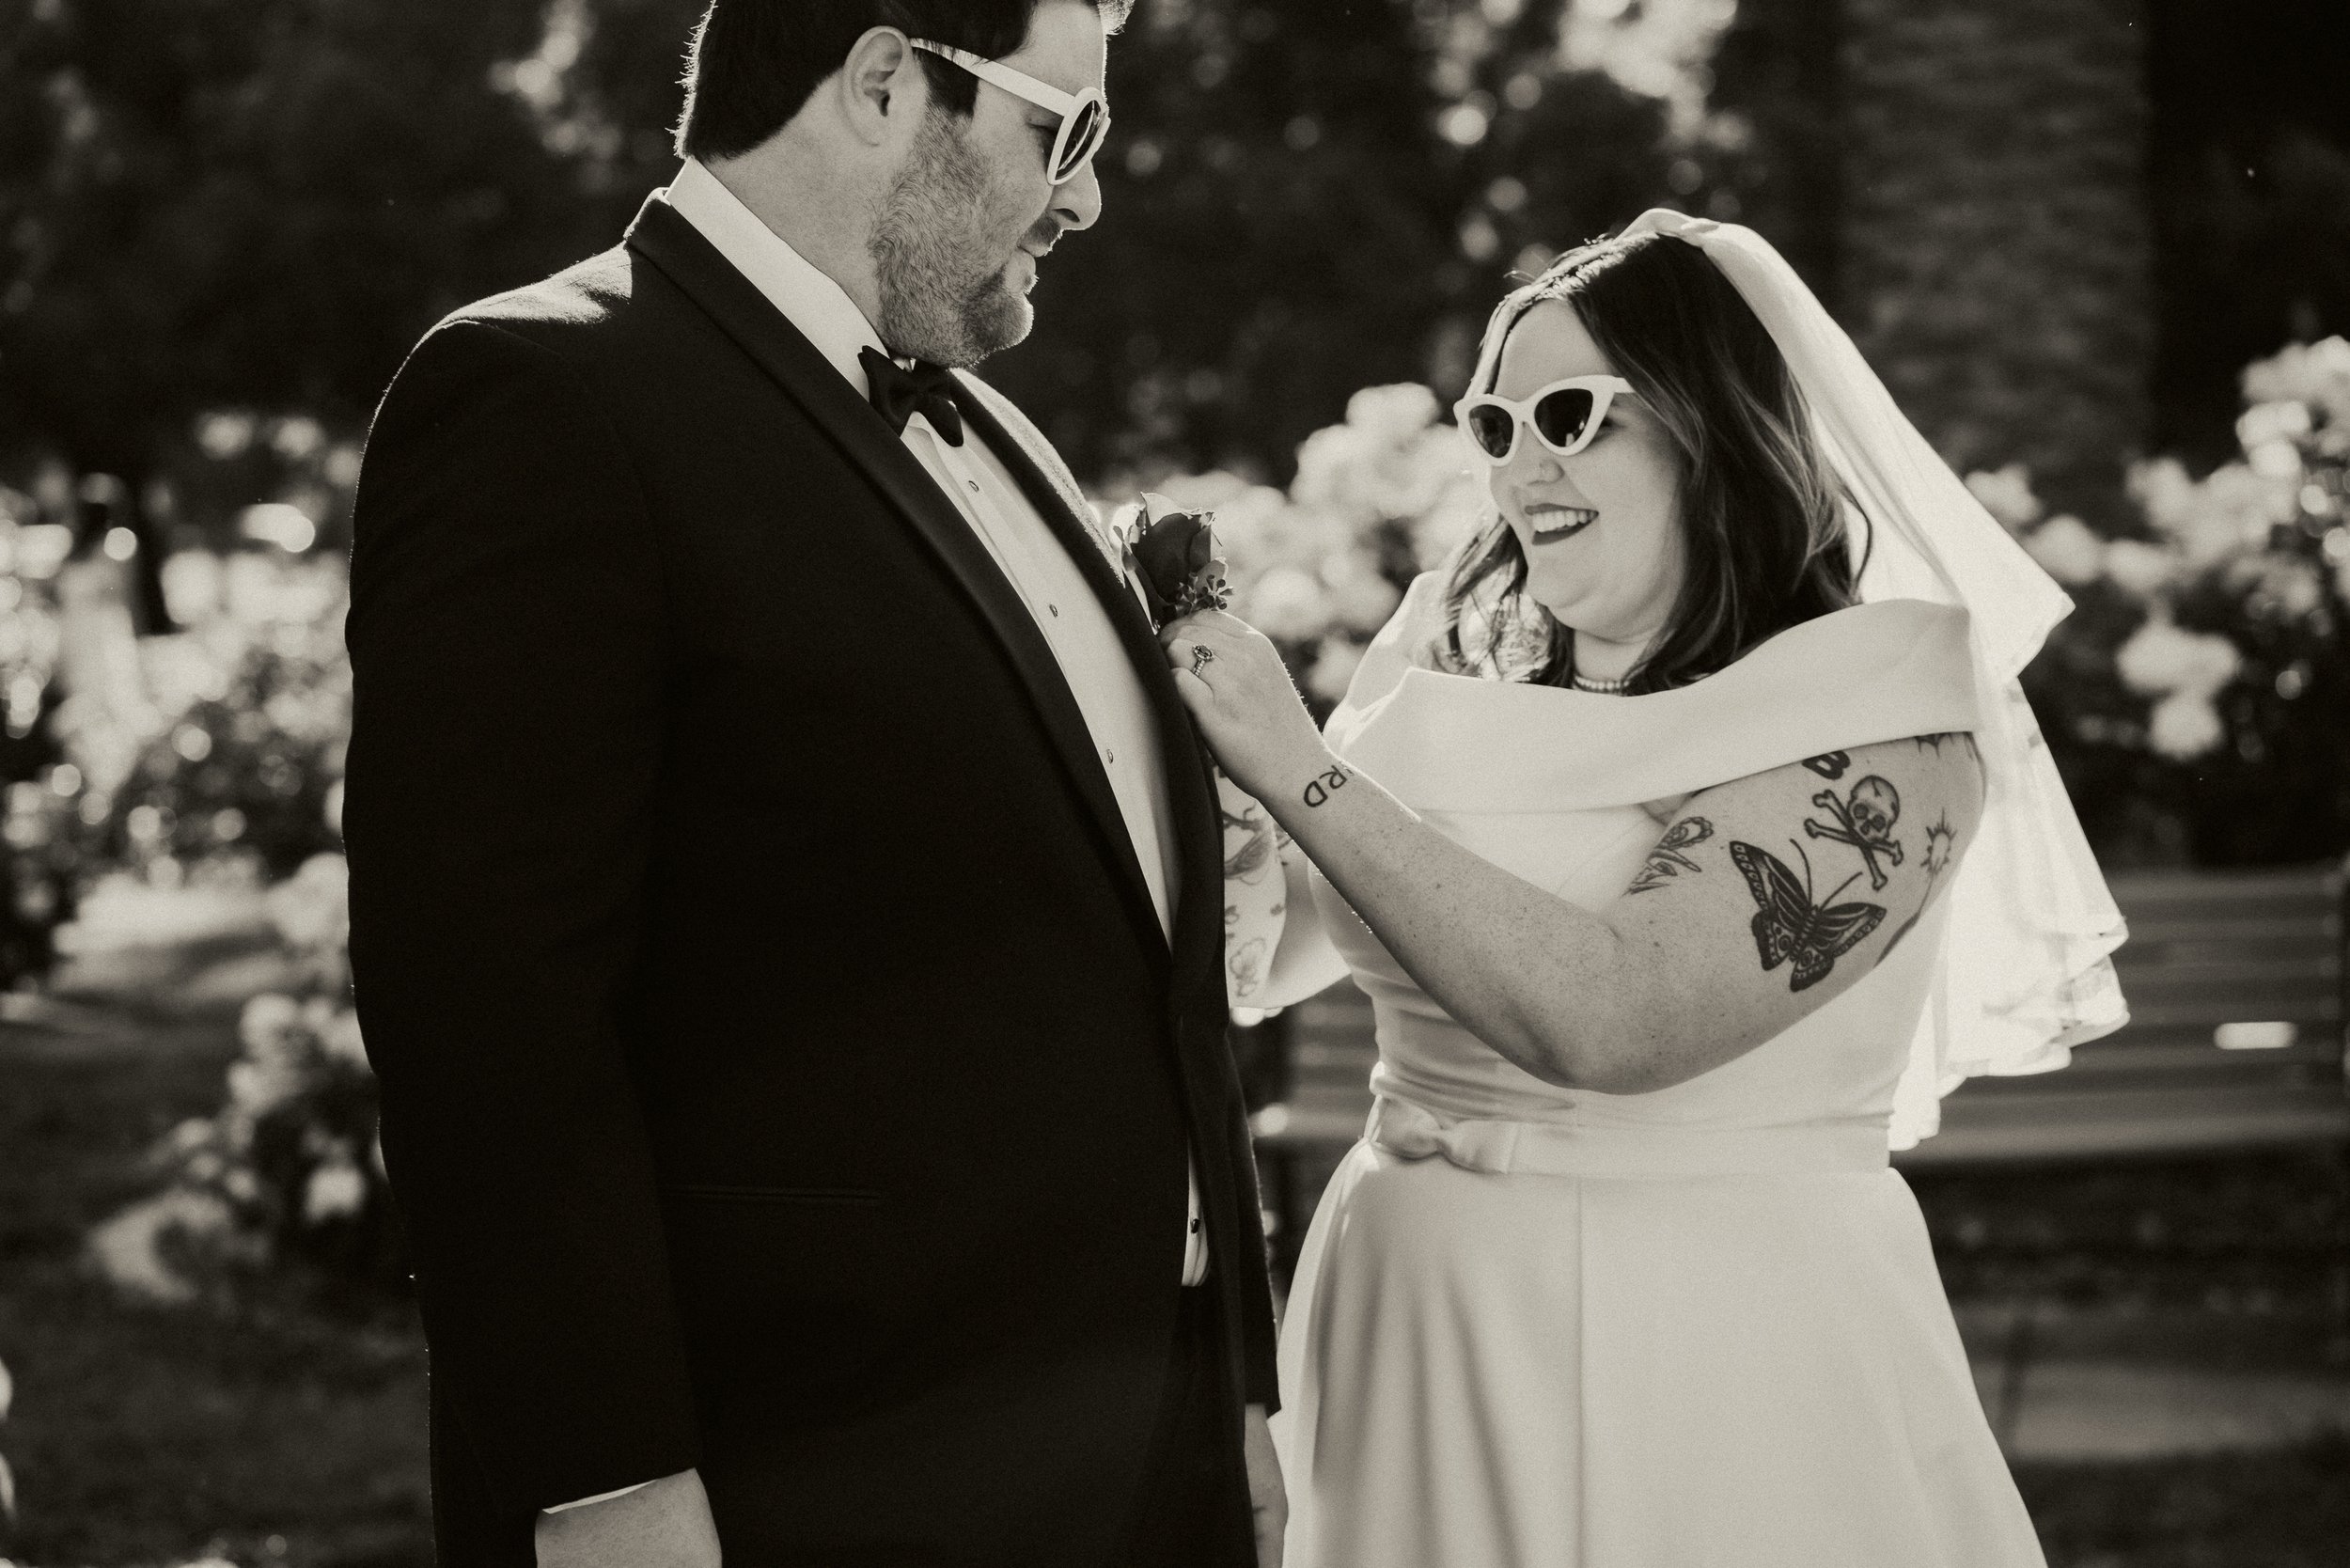 Sacramento Elopement and Wedding Photographer